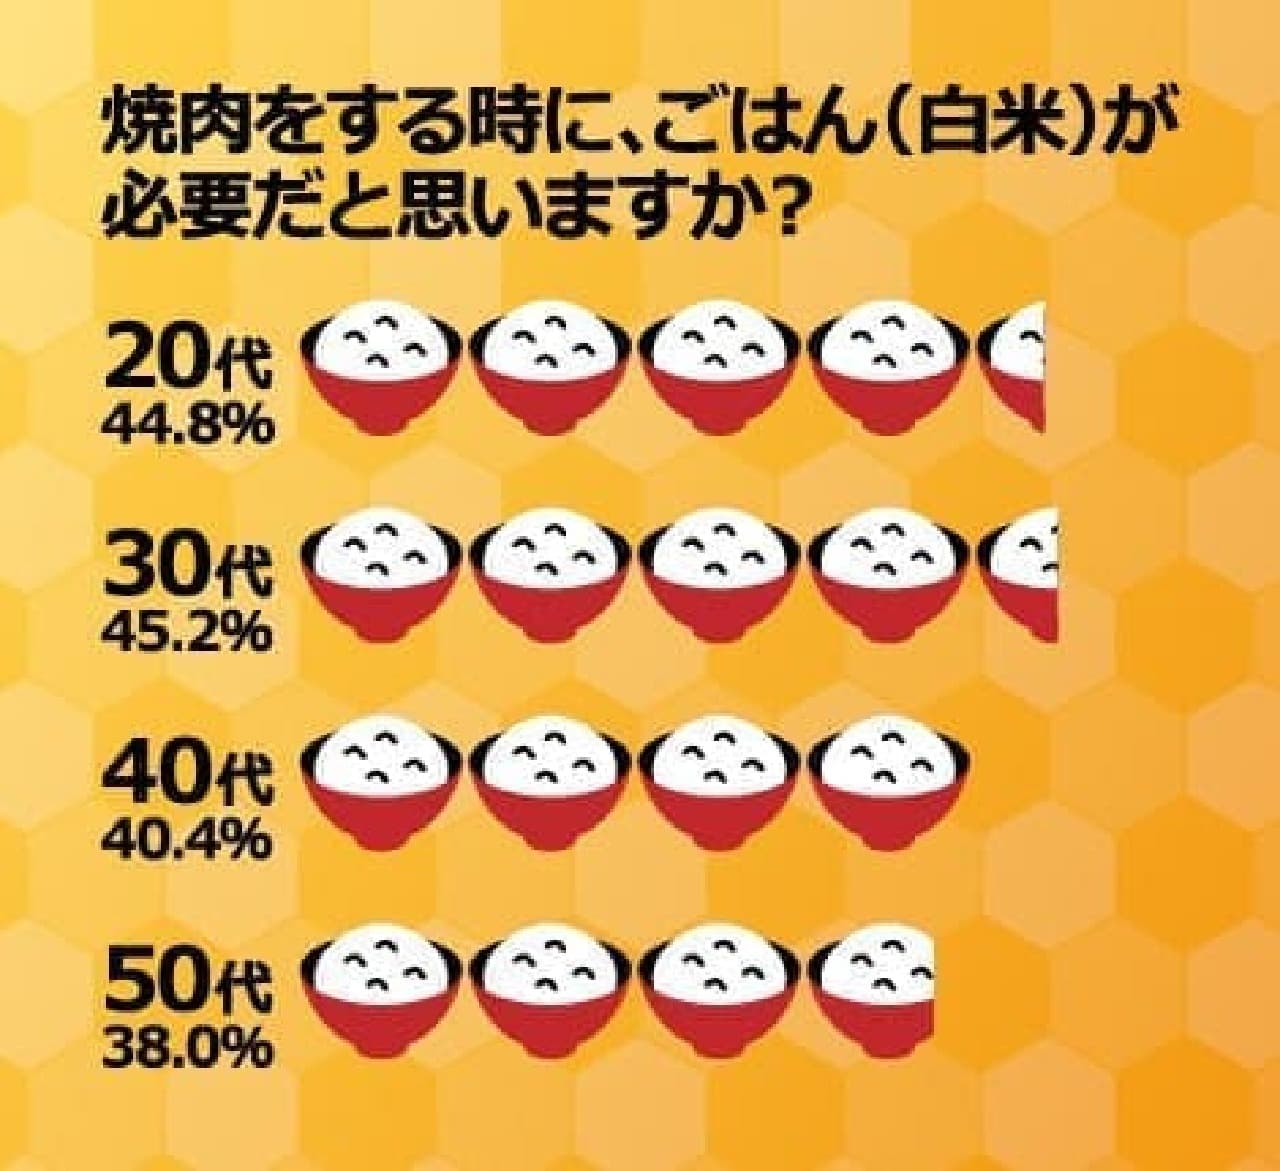 Awareness survey on how to eat yakiniku